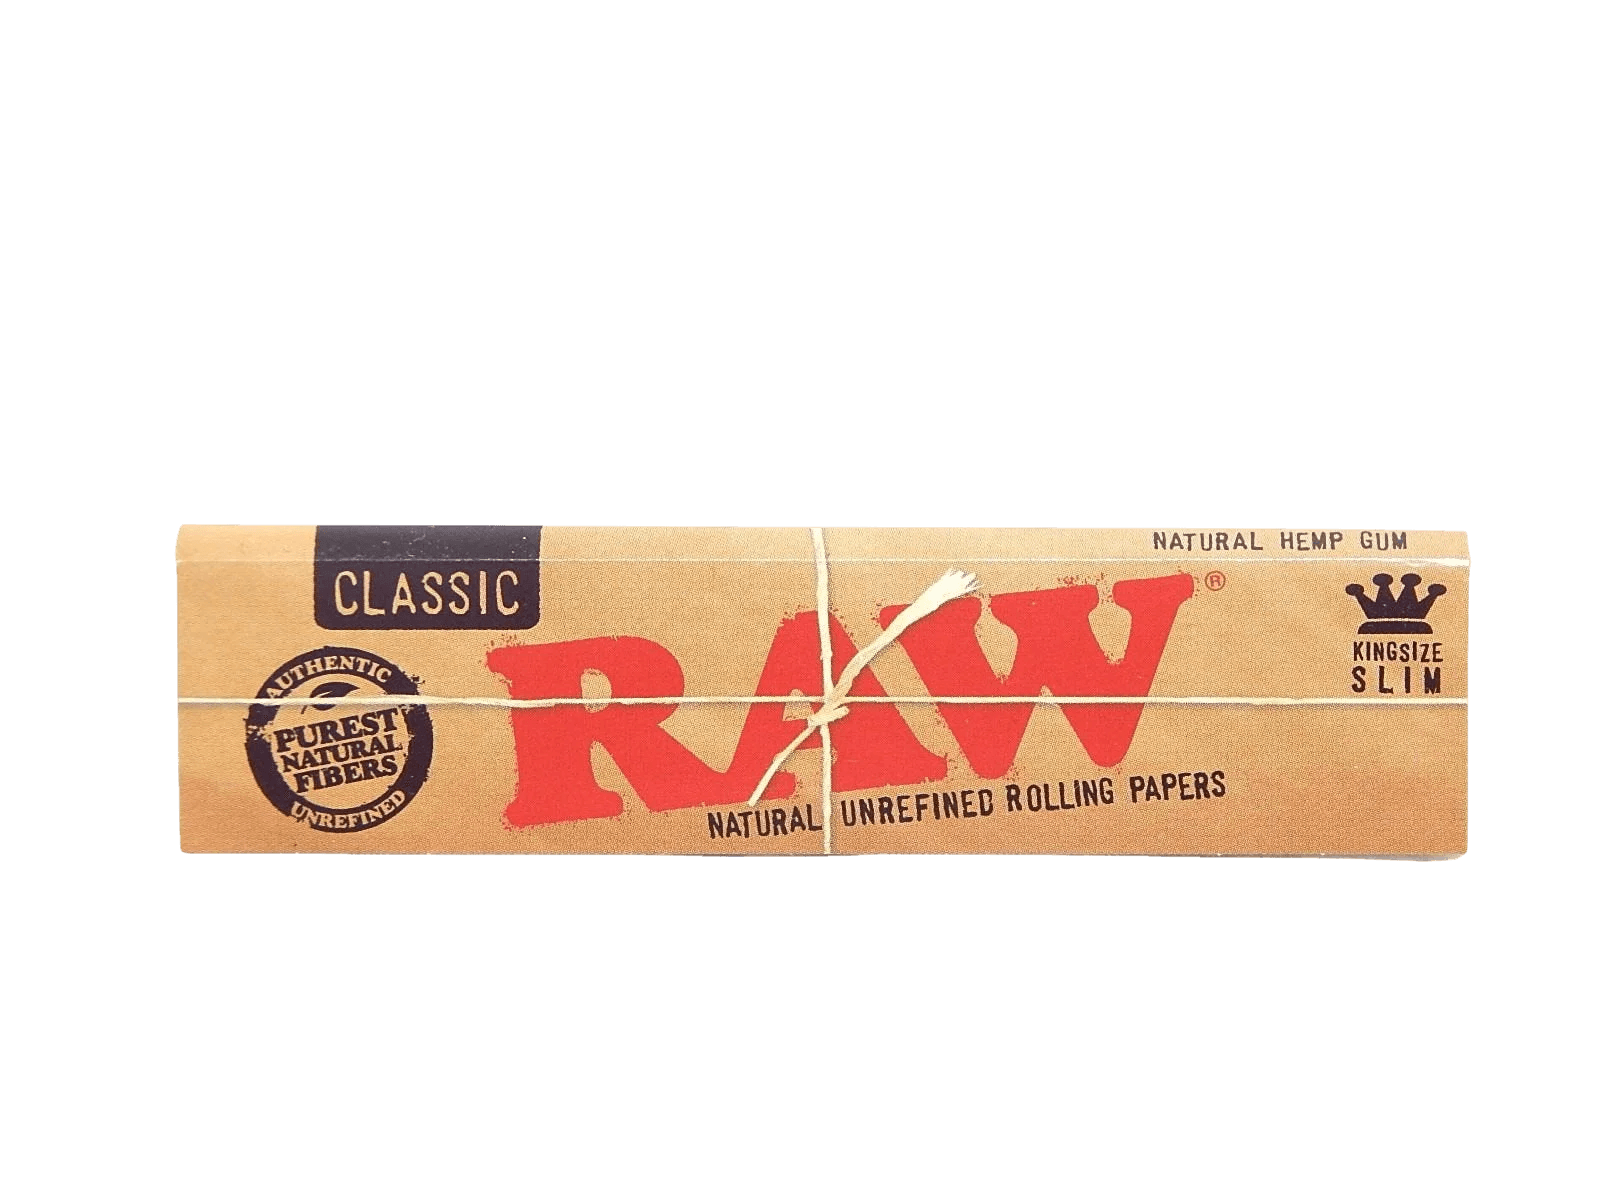 RAW Classic King Size Slim Papers - Coastal Hemp Co